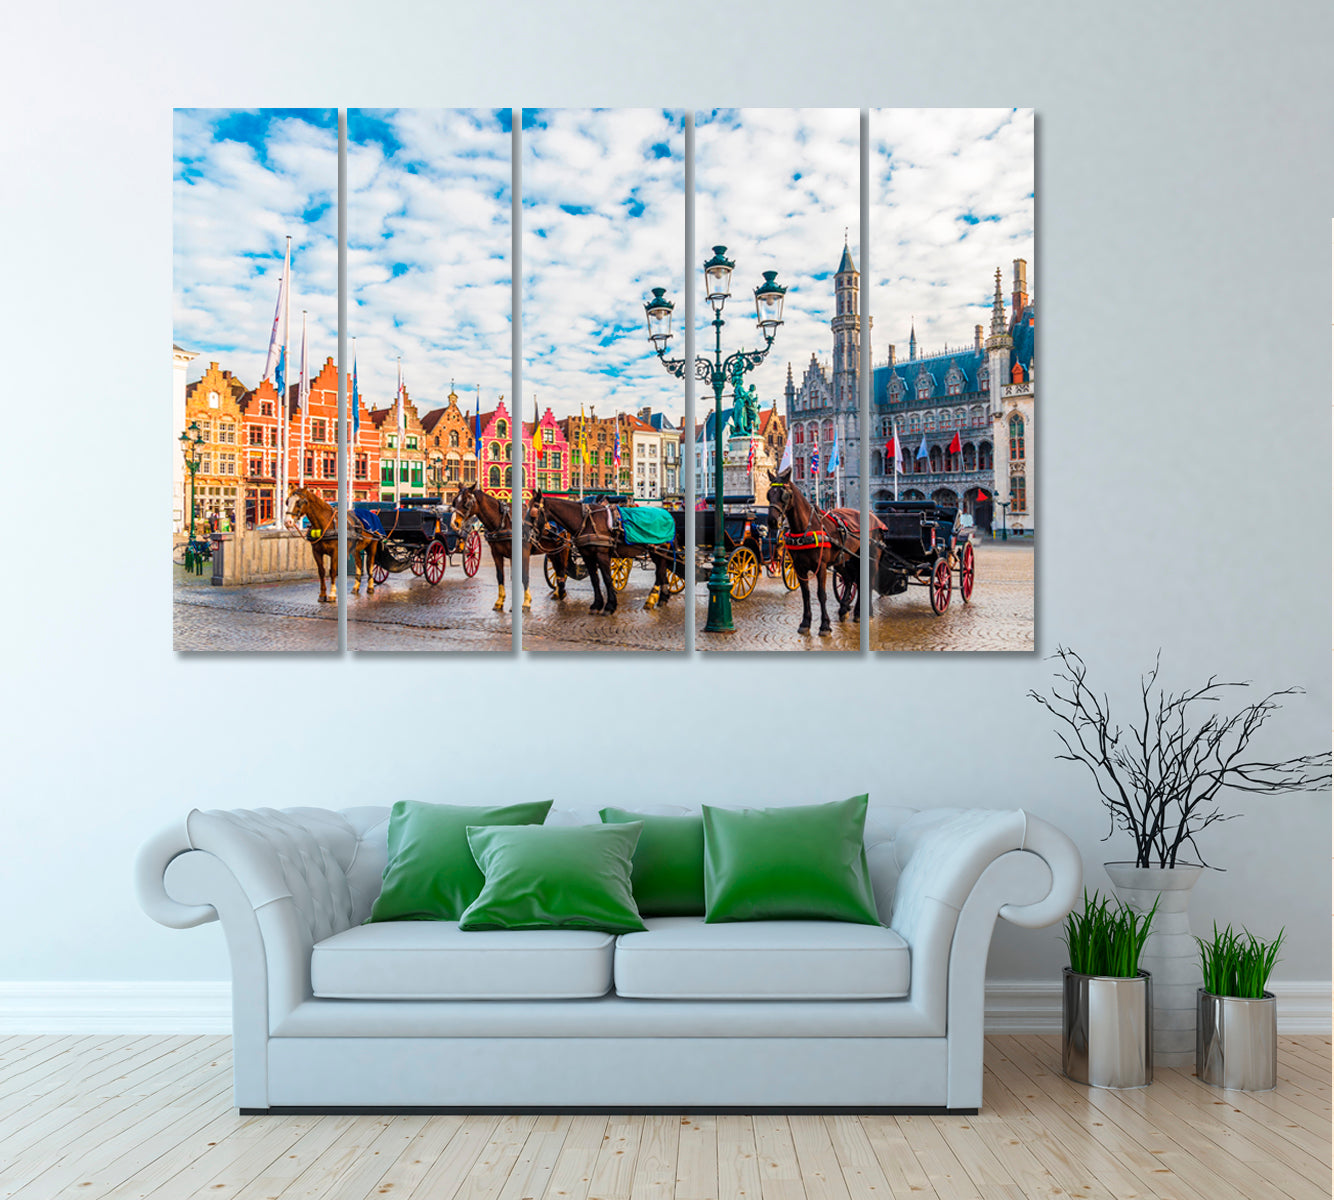 Market Square Bruges Belgium Canvas Print ArtLexy 5 Panels 36"x24" inches 